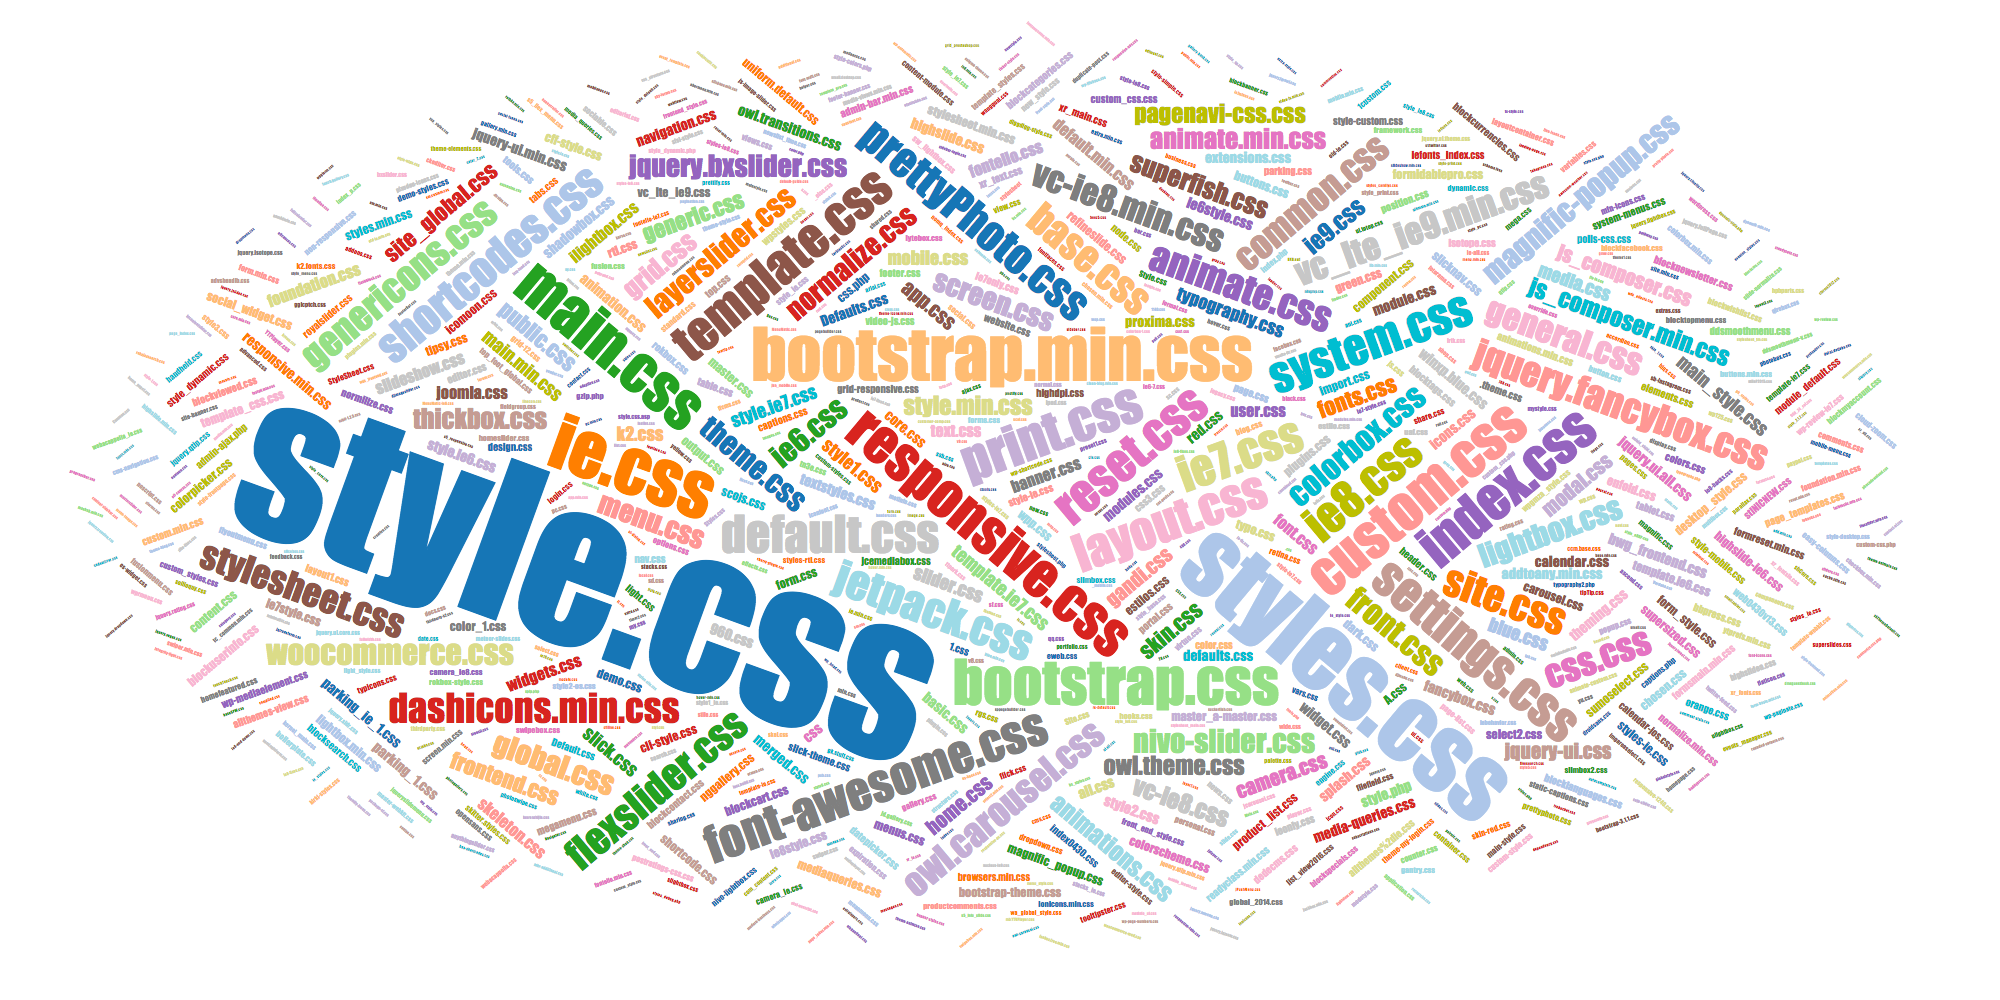 Popular names of CSS files animate.css, animate.min.css, etc.